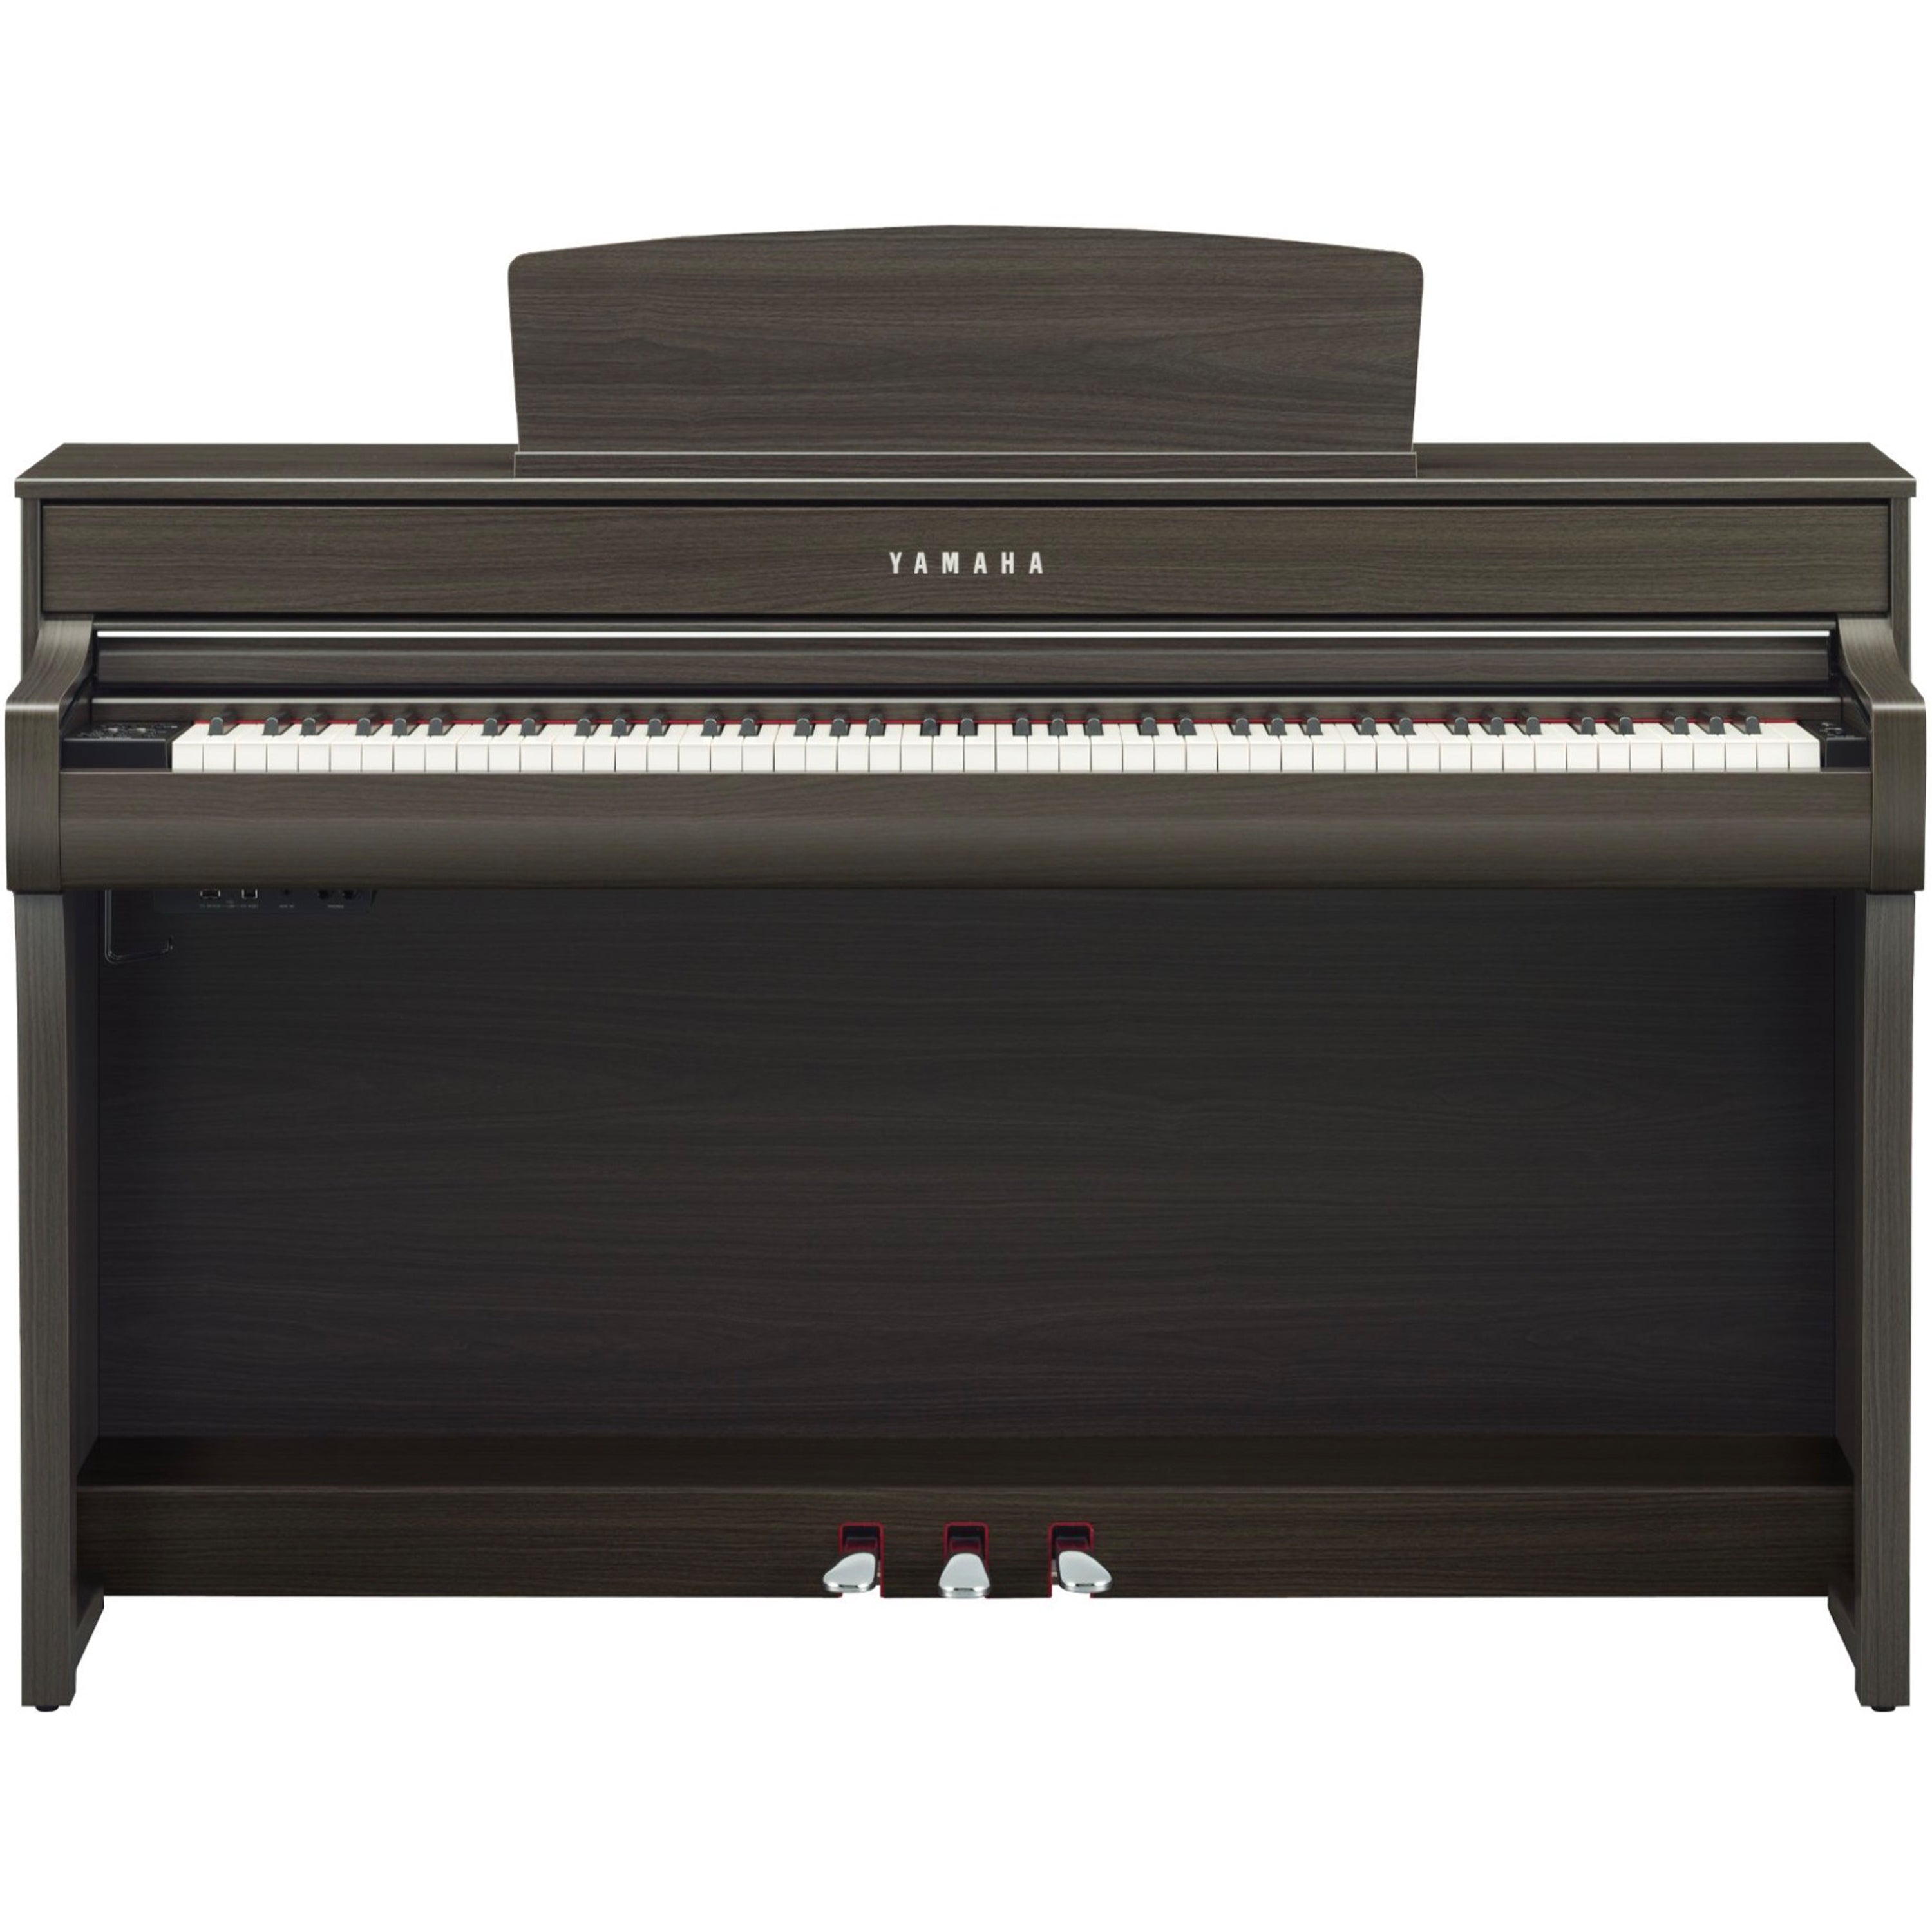 Yamaha Clavinova CLP-745 Digital Piano - Dark Walnut - front view